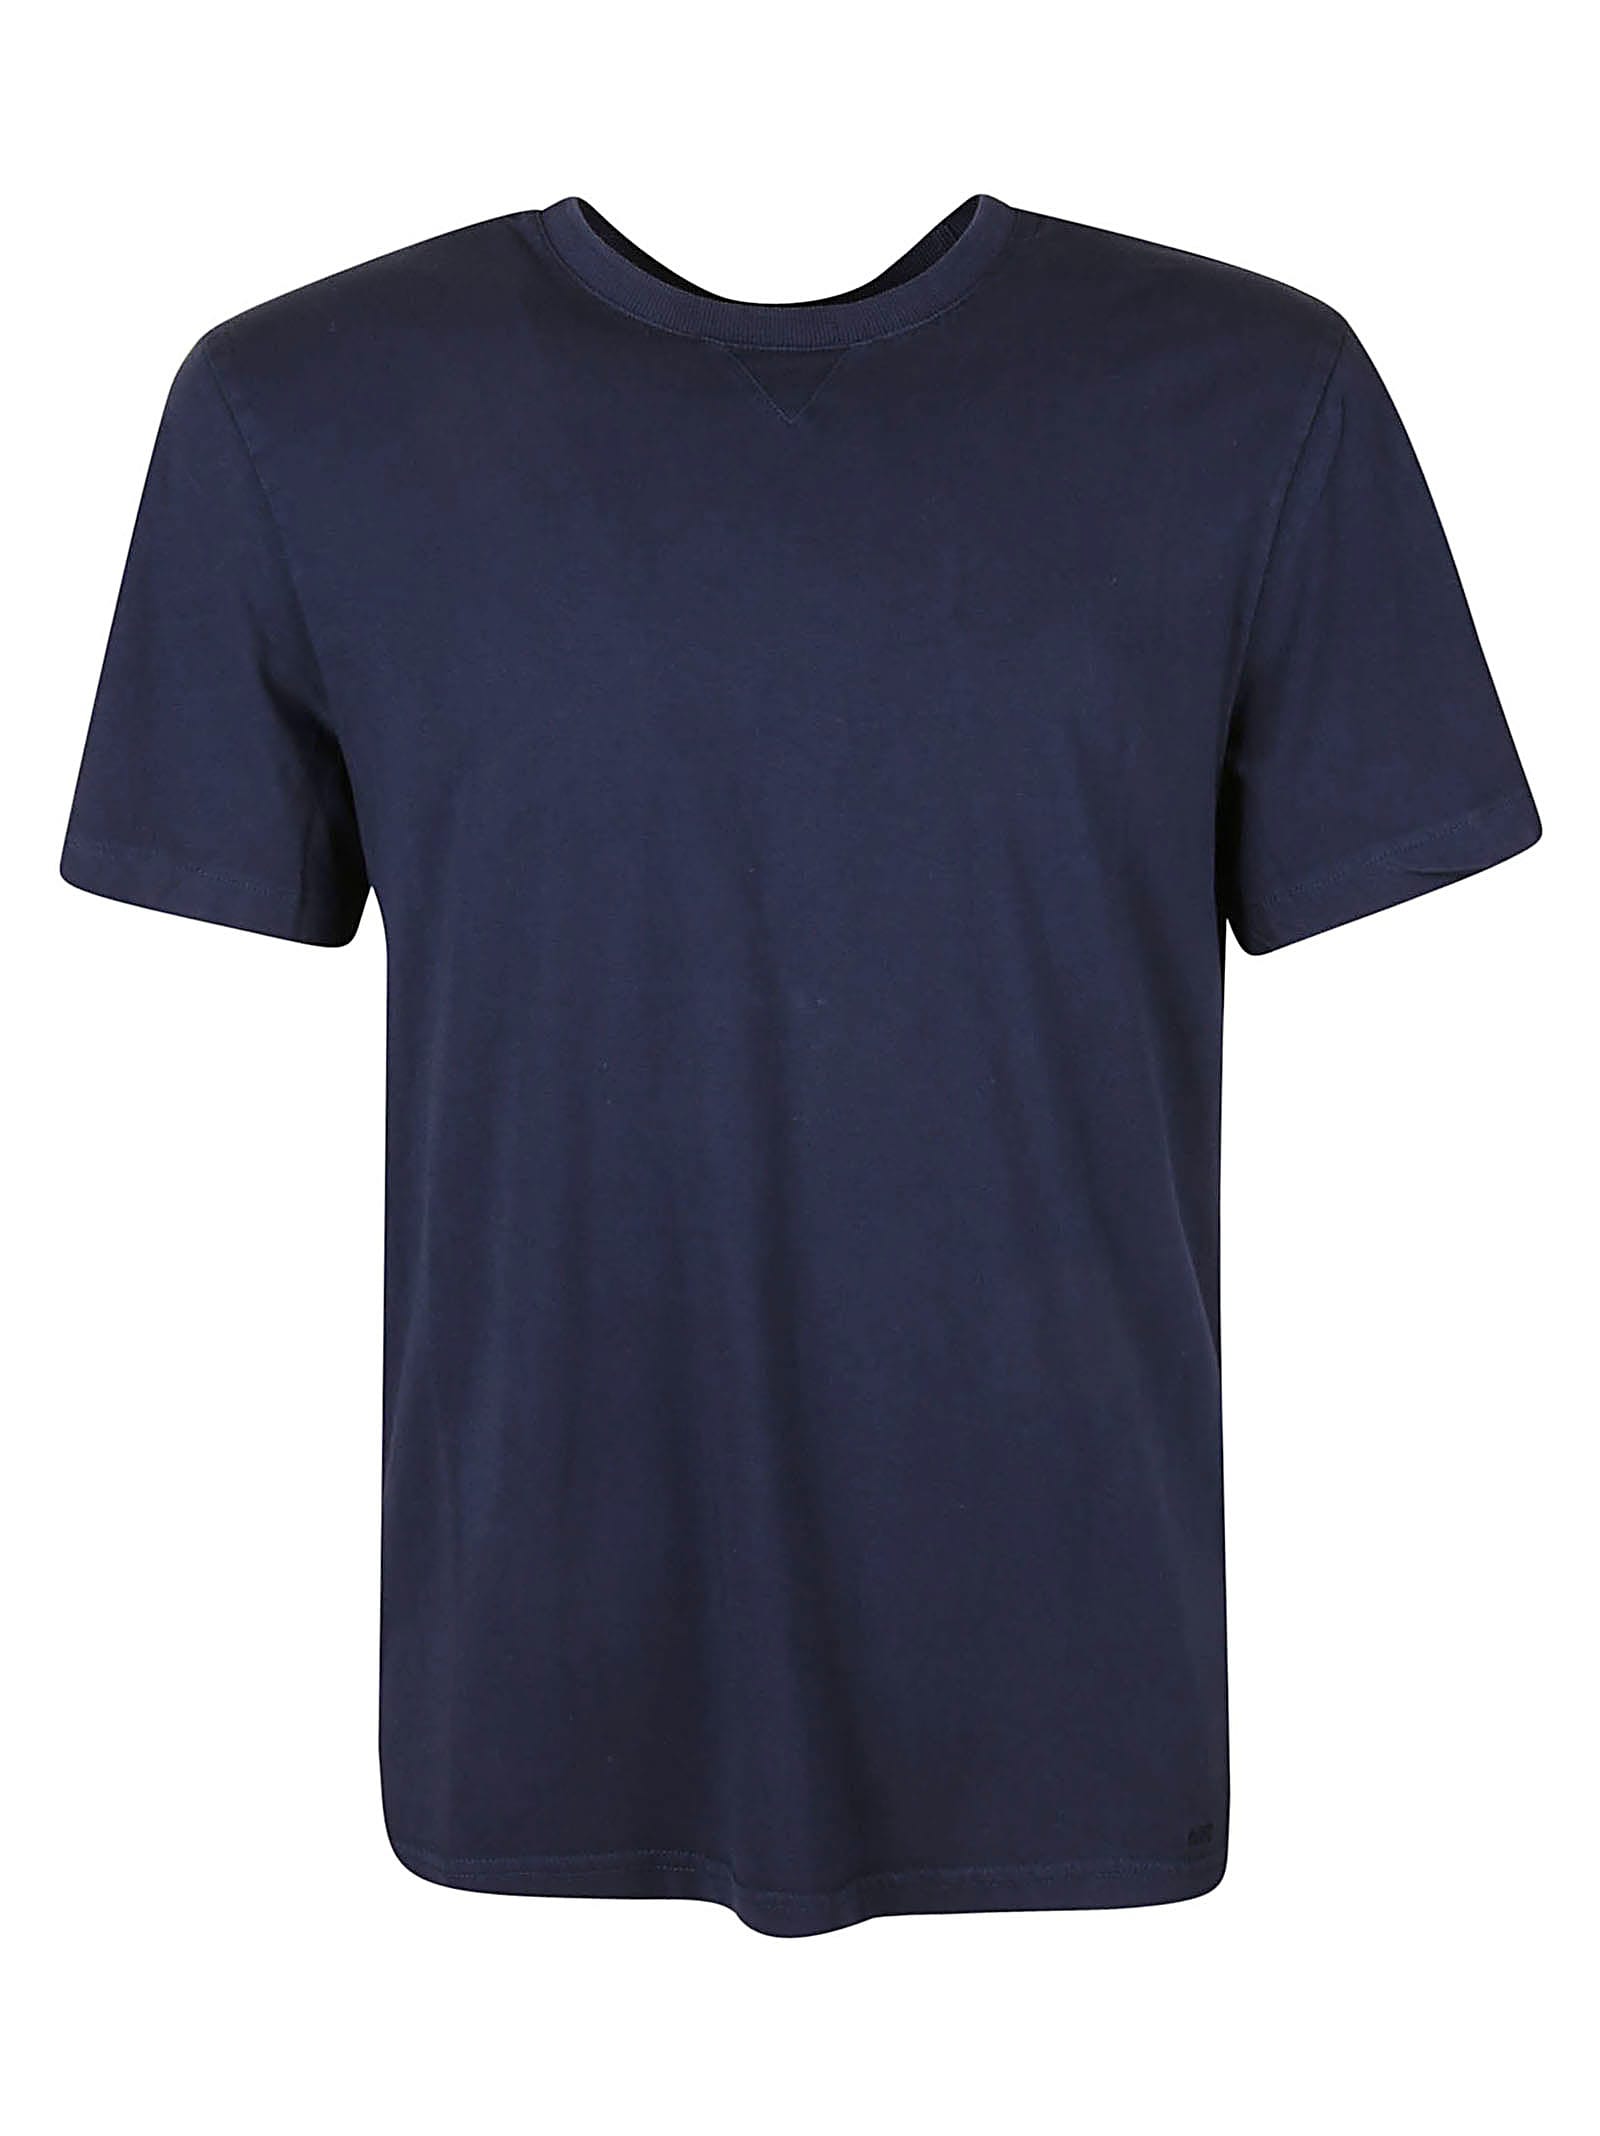 Michael Kors Spring 22 T-shirt